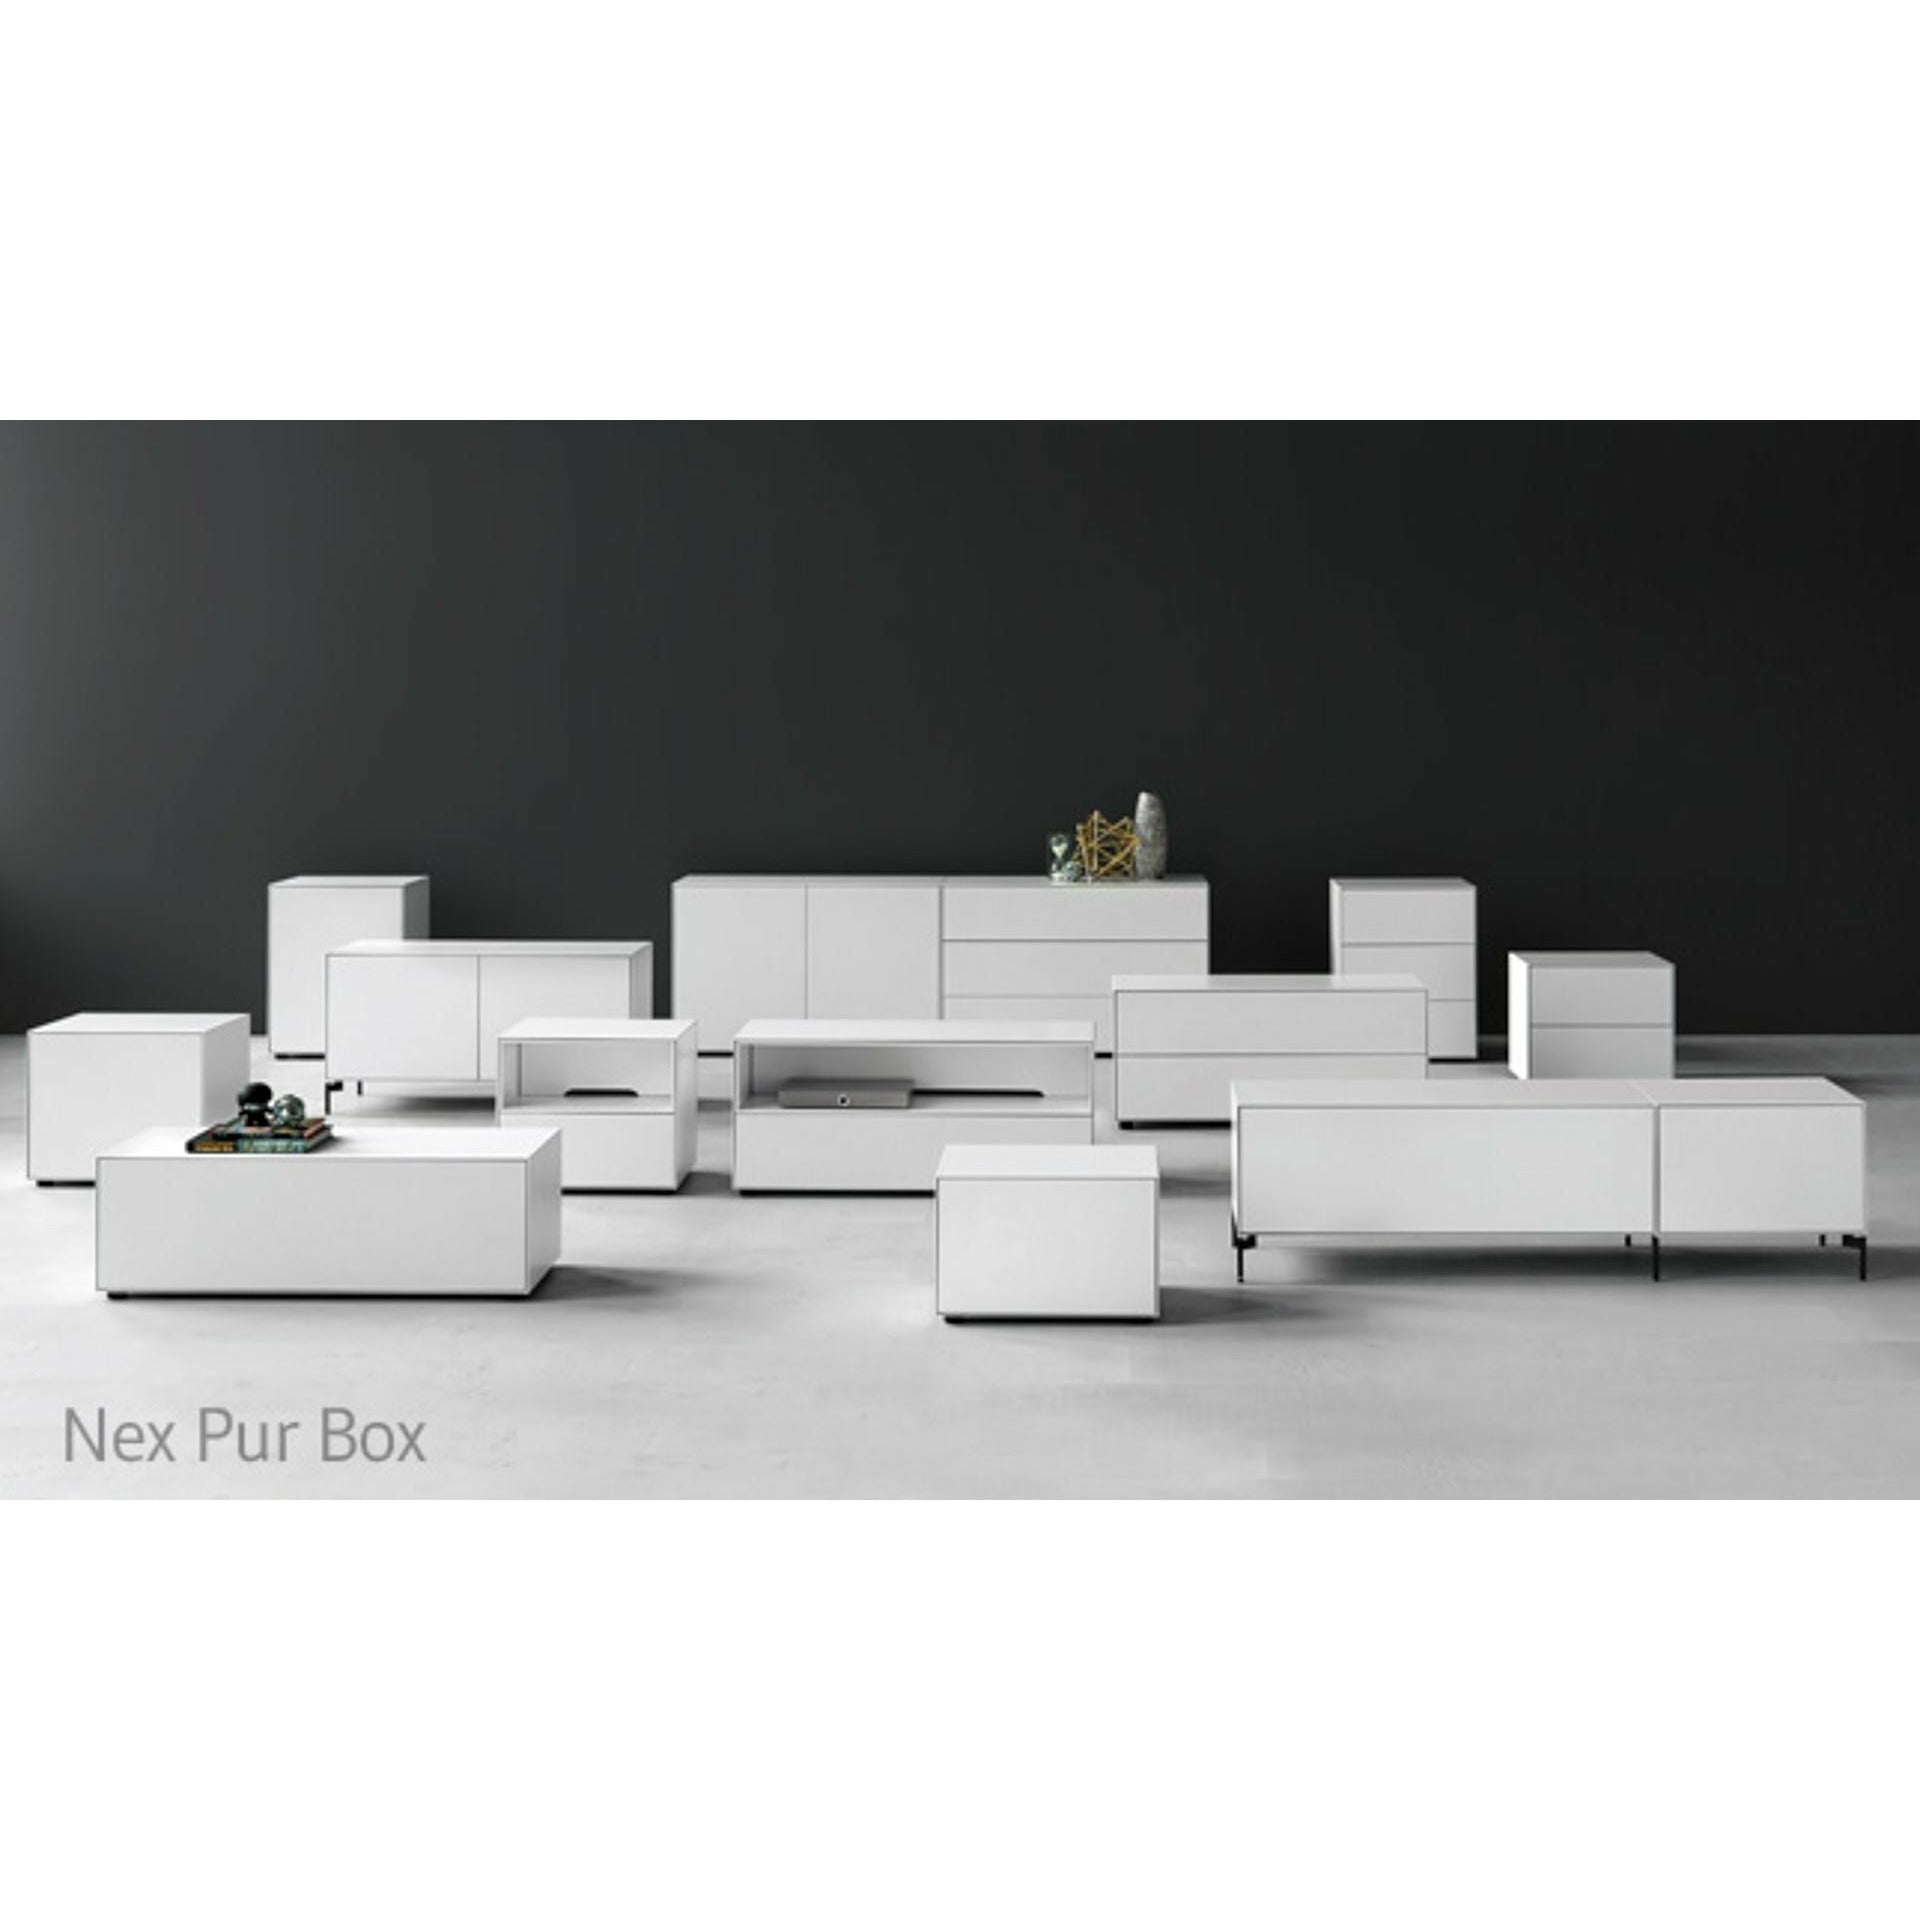 Piure Nex Pur Box Media Flap HX W 37,5x120 cm, 1 hylde